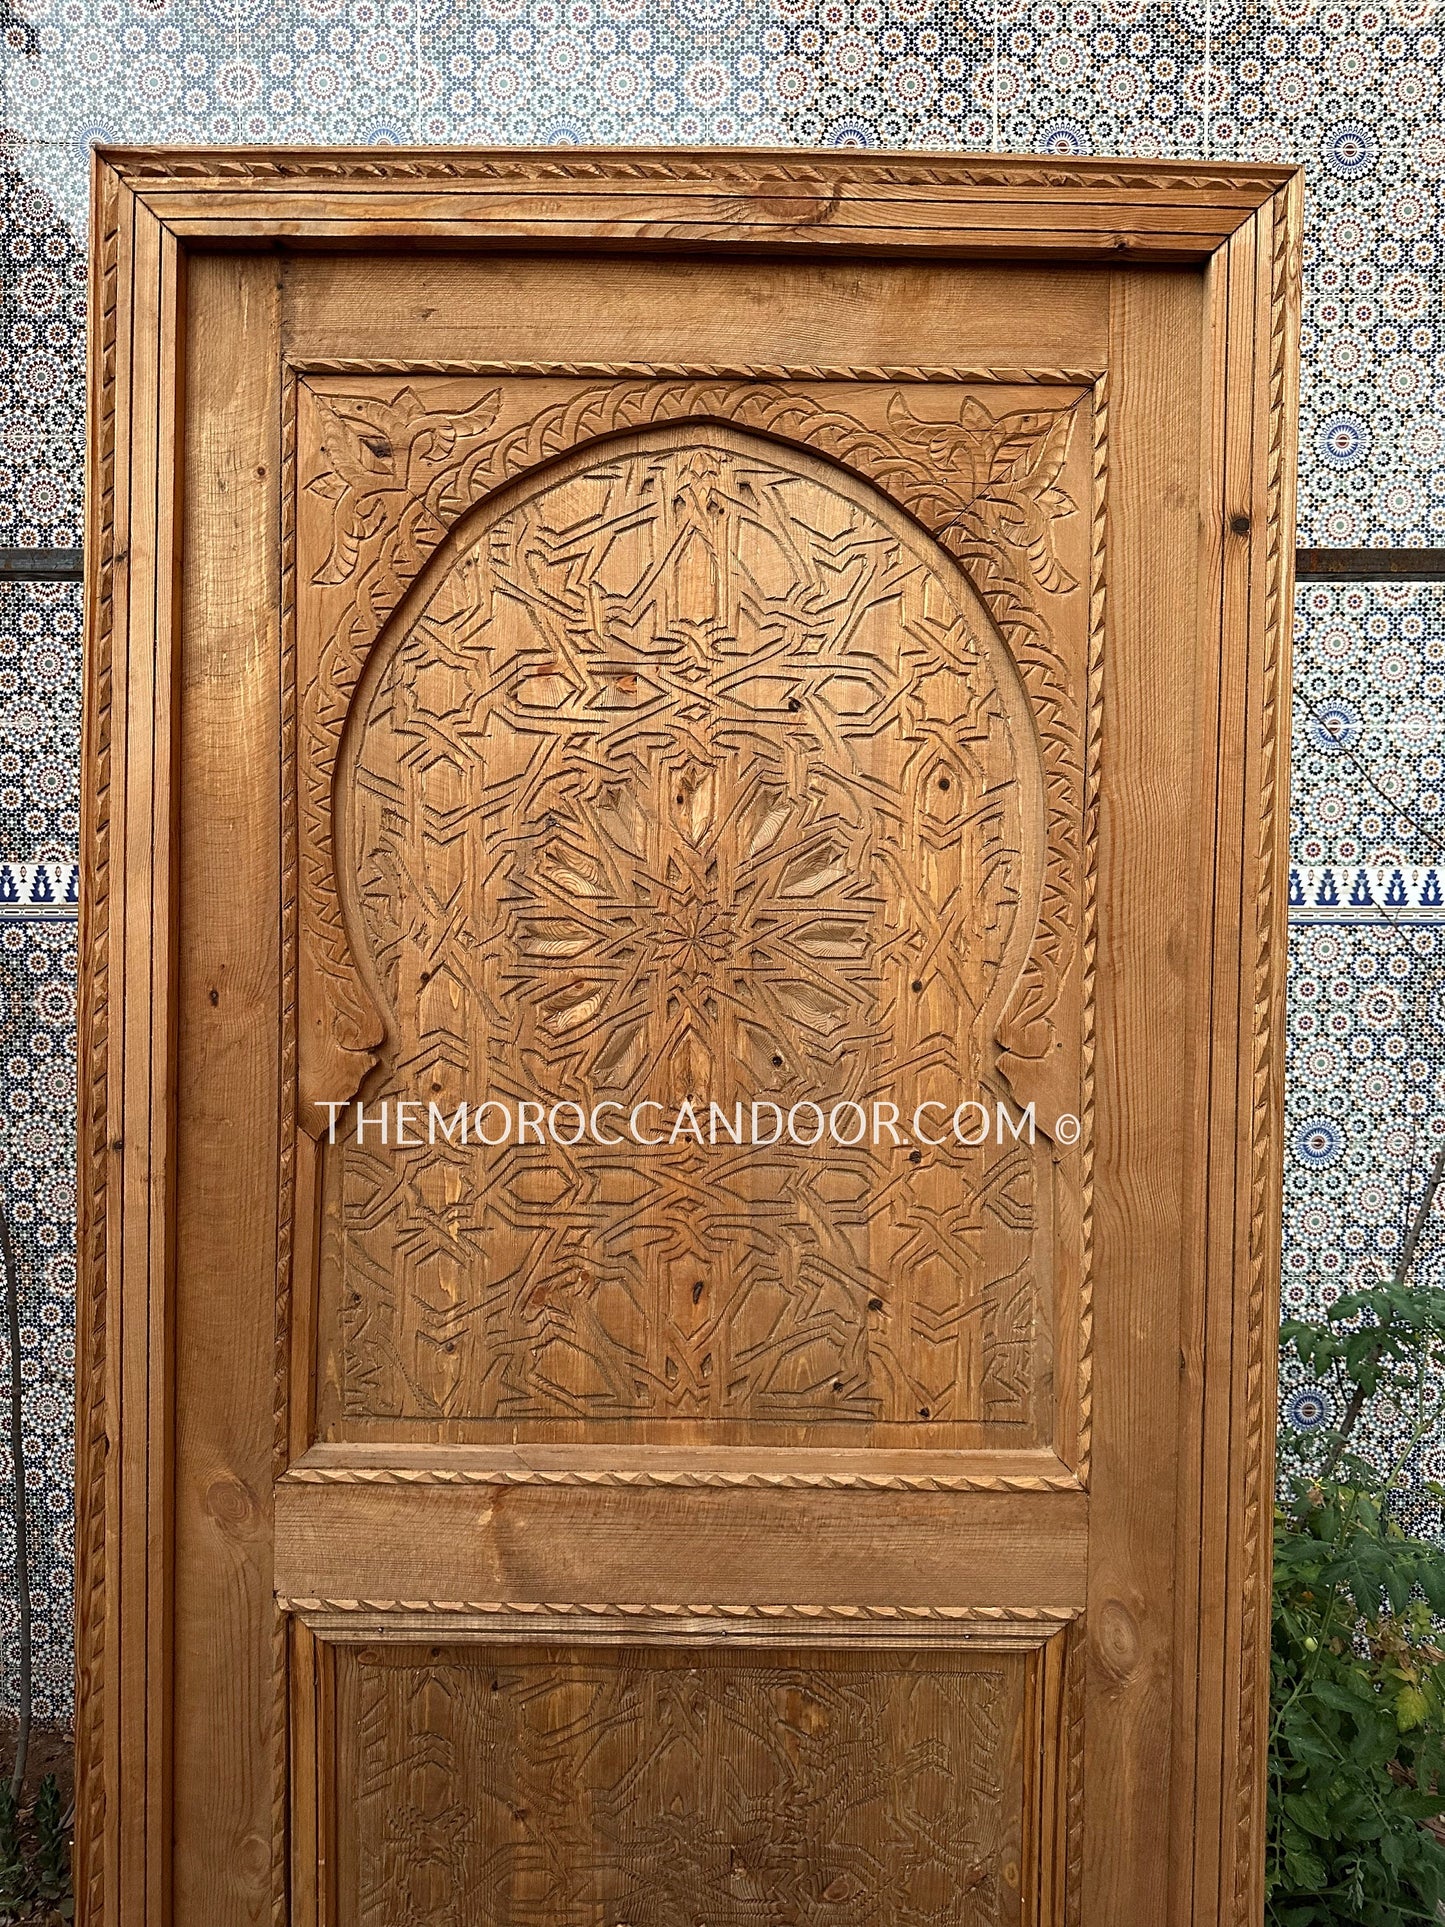 Exquisite Hand Carved Wood Door - Elevate Your Home with Exotic Charm - Custom Wooden Doors